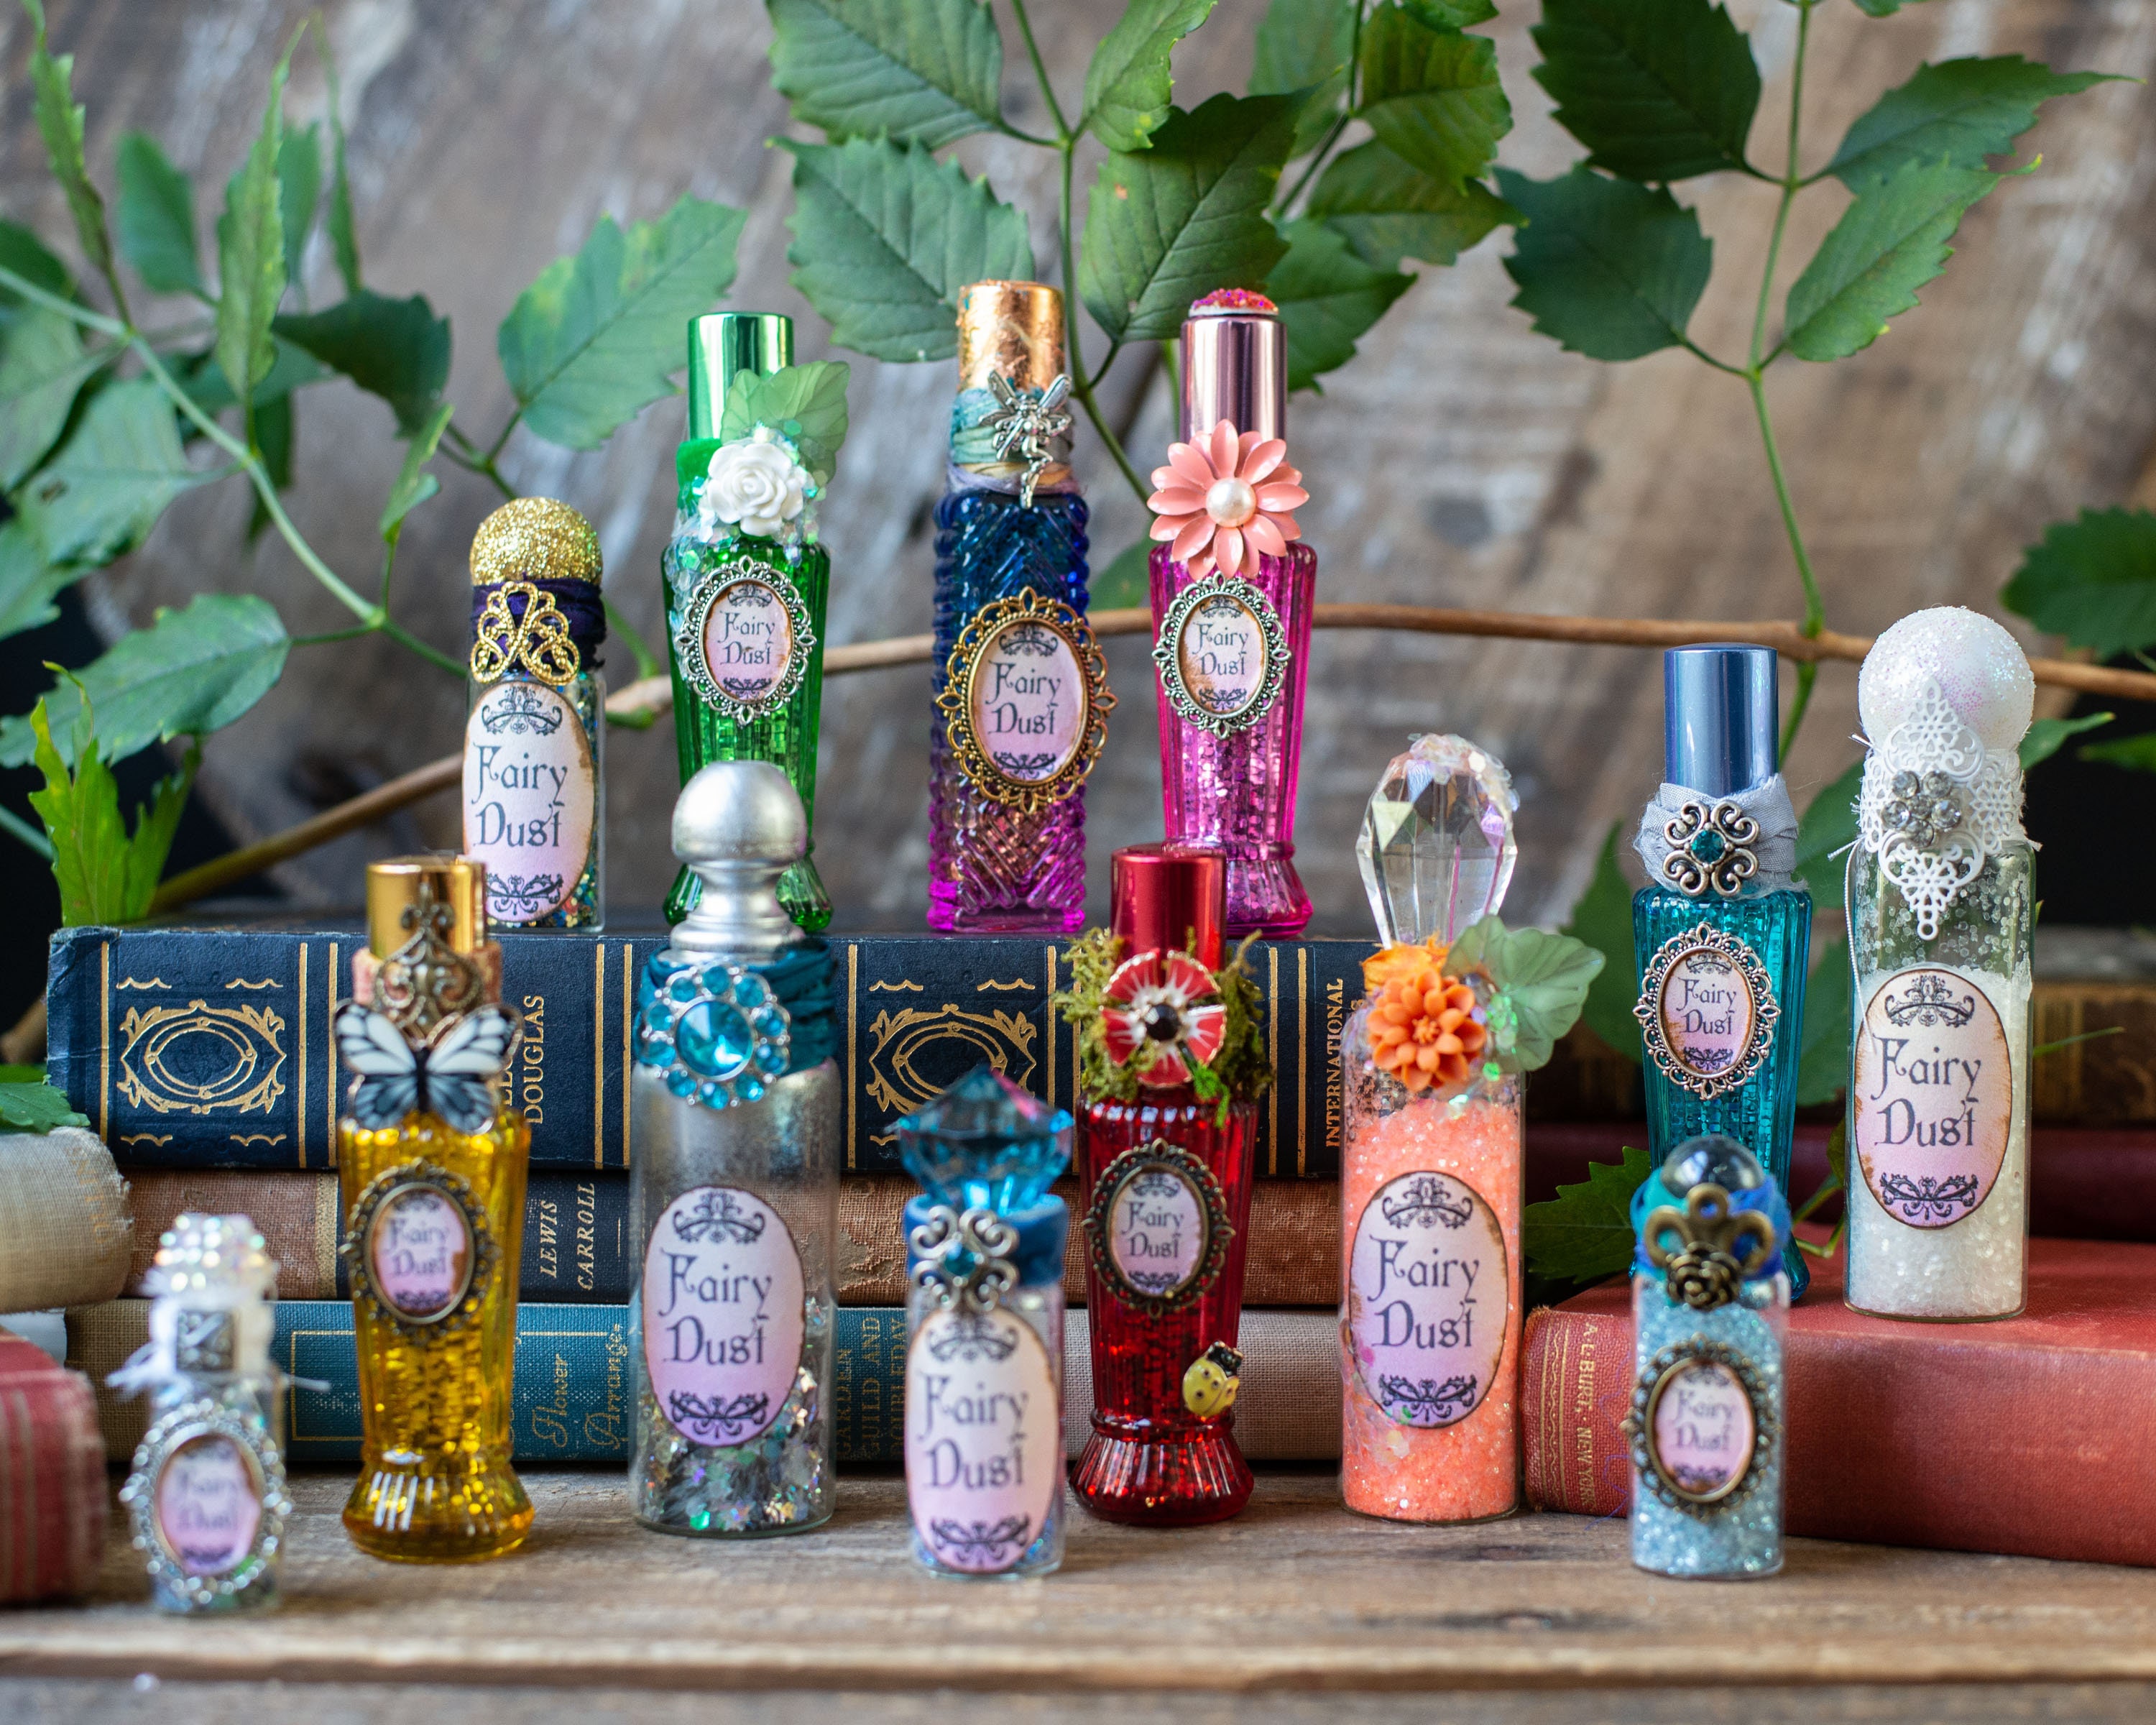 Miniature Fairy Potion Bottles, Fairy Miniature Bottles, 3 or 5